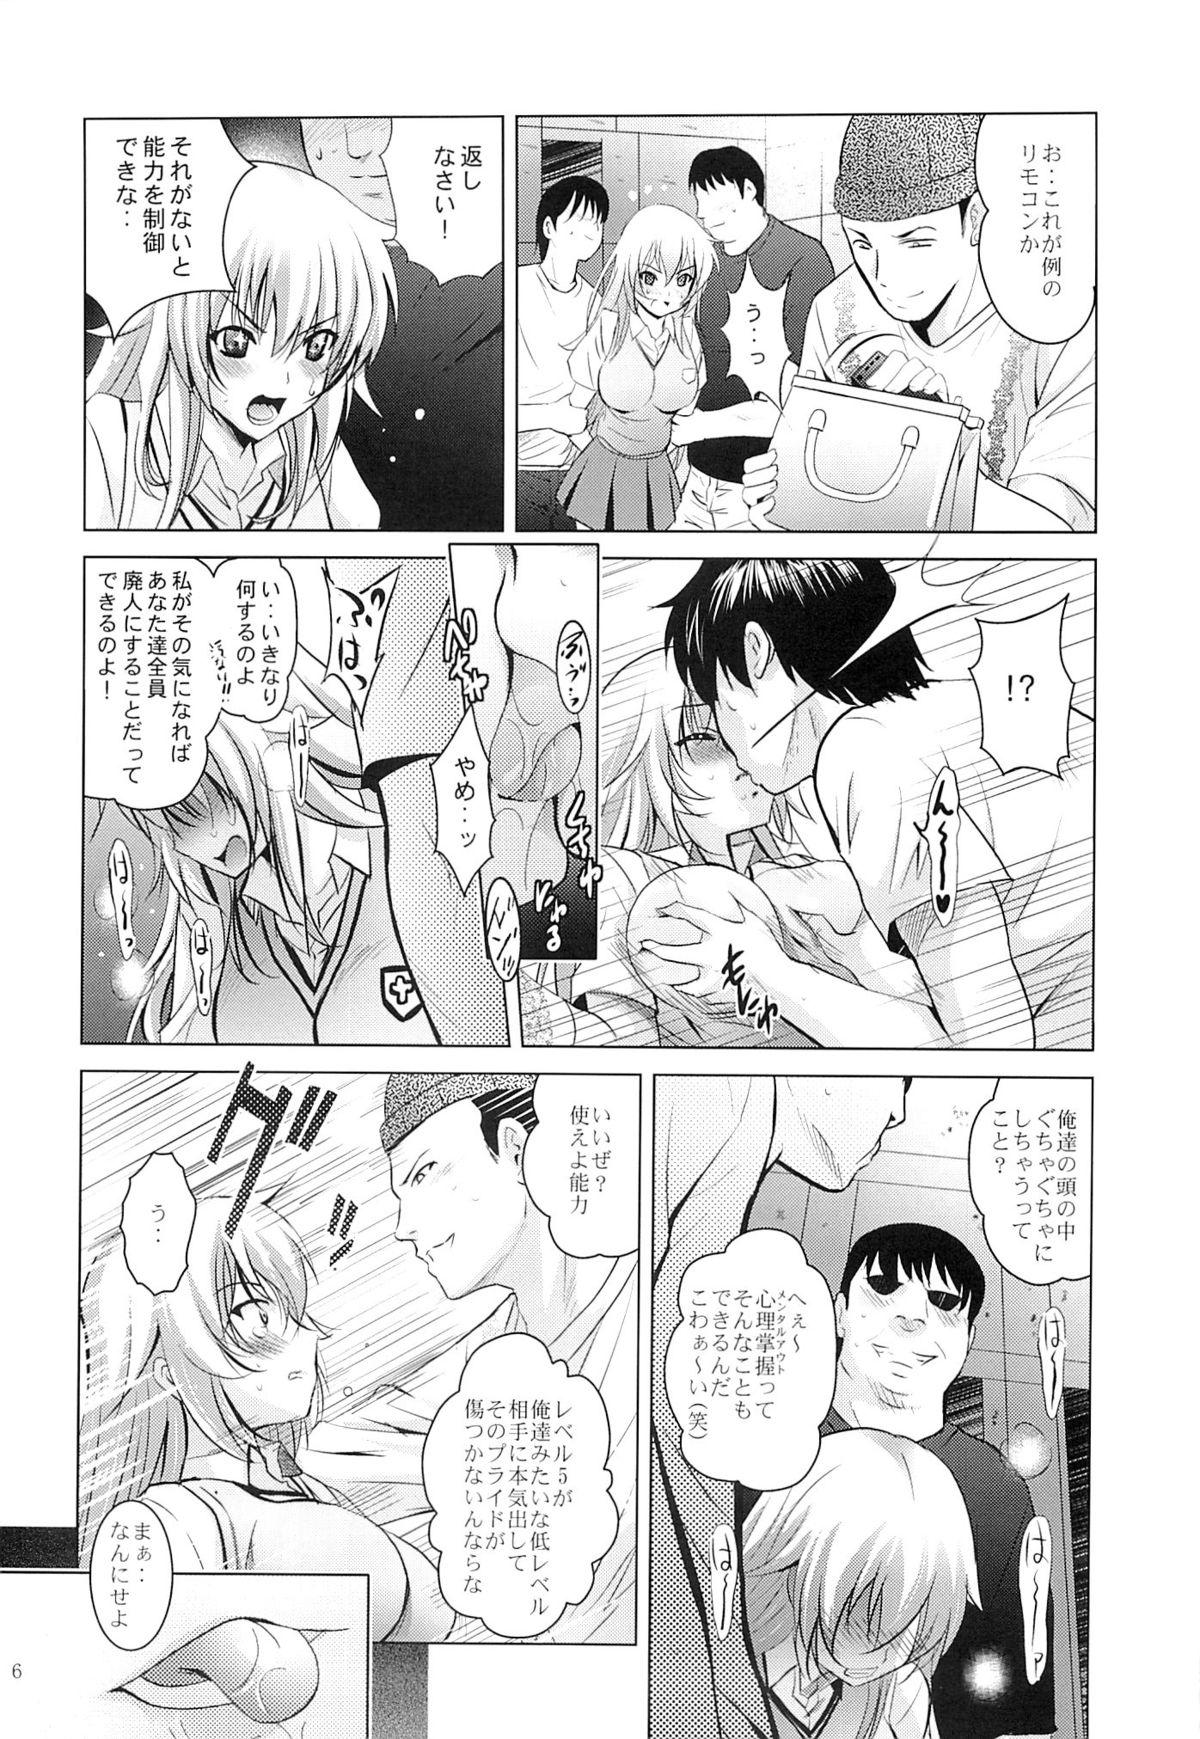 Reversecowgirl MOUSOU THEATER 41 - Toaru majutsu no index Petite Girl Porn - Page 5